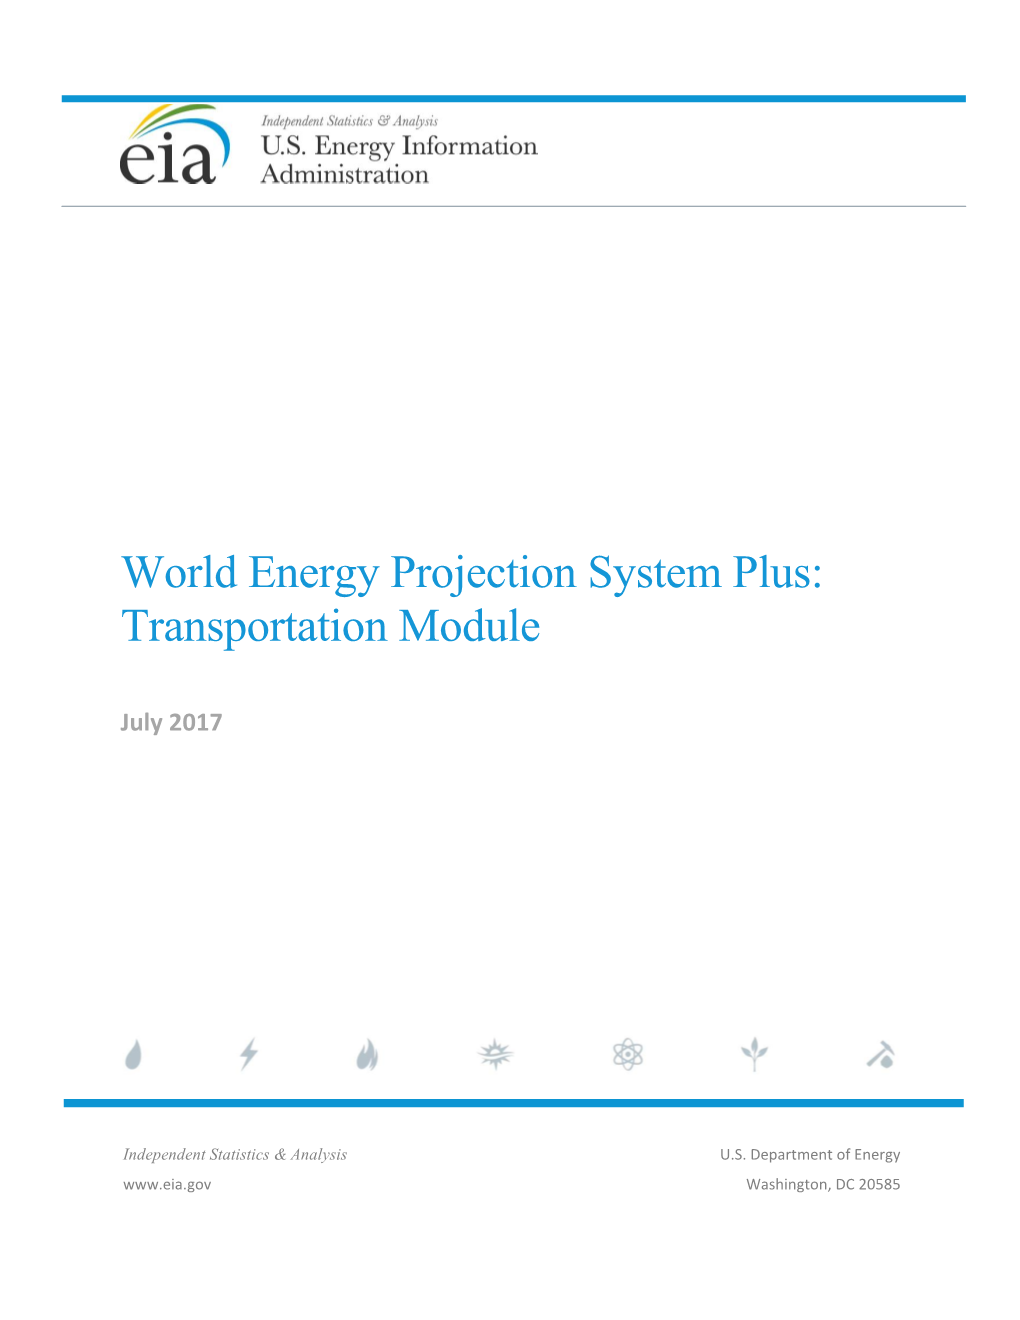 World Energy Projection System Plus: Transportation Module